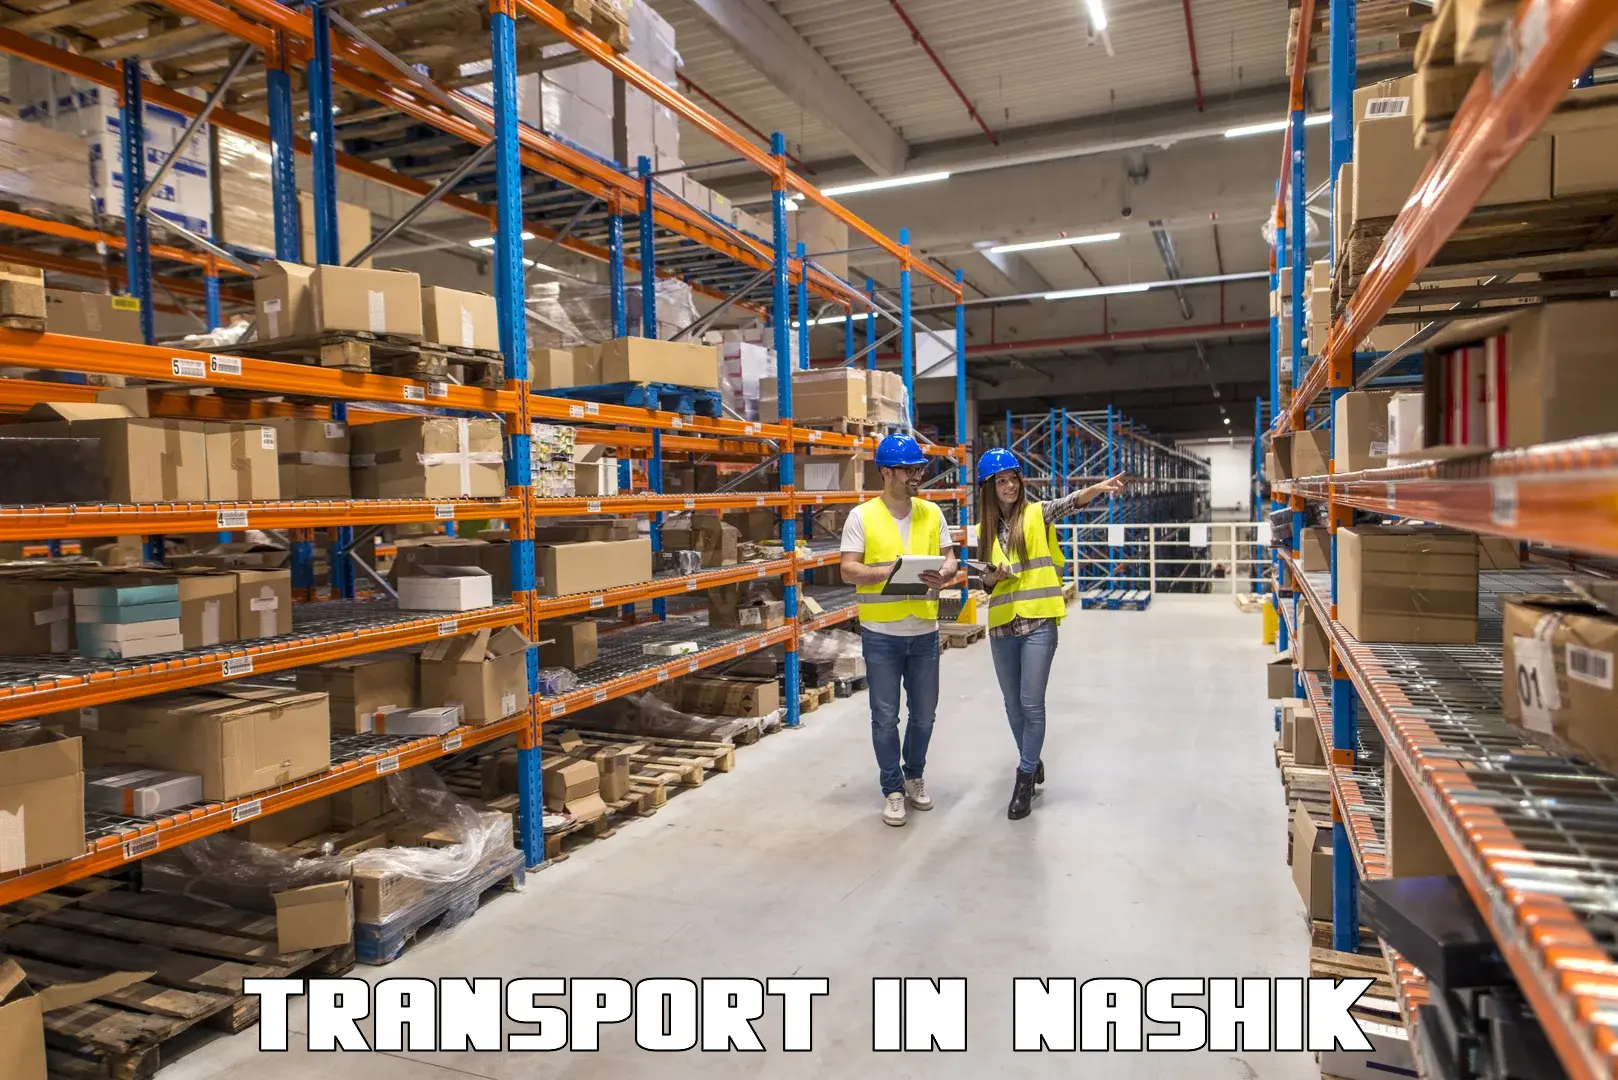 Transport in sharing in Nashik